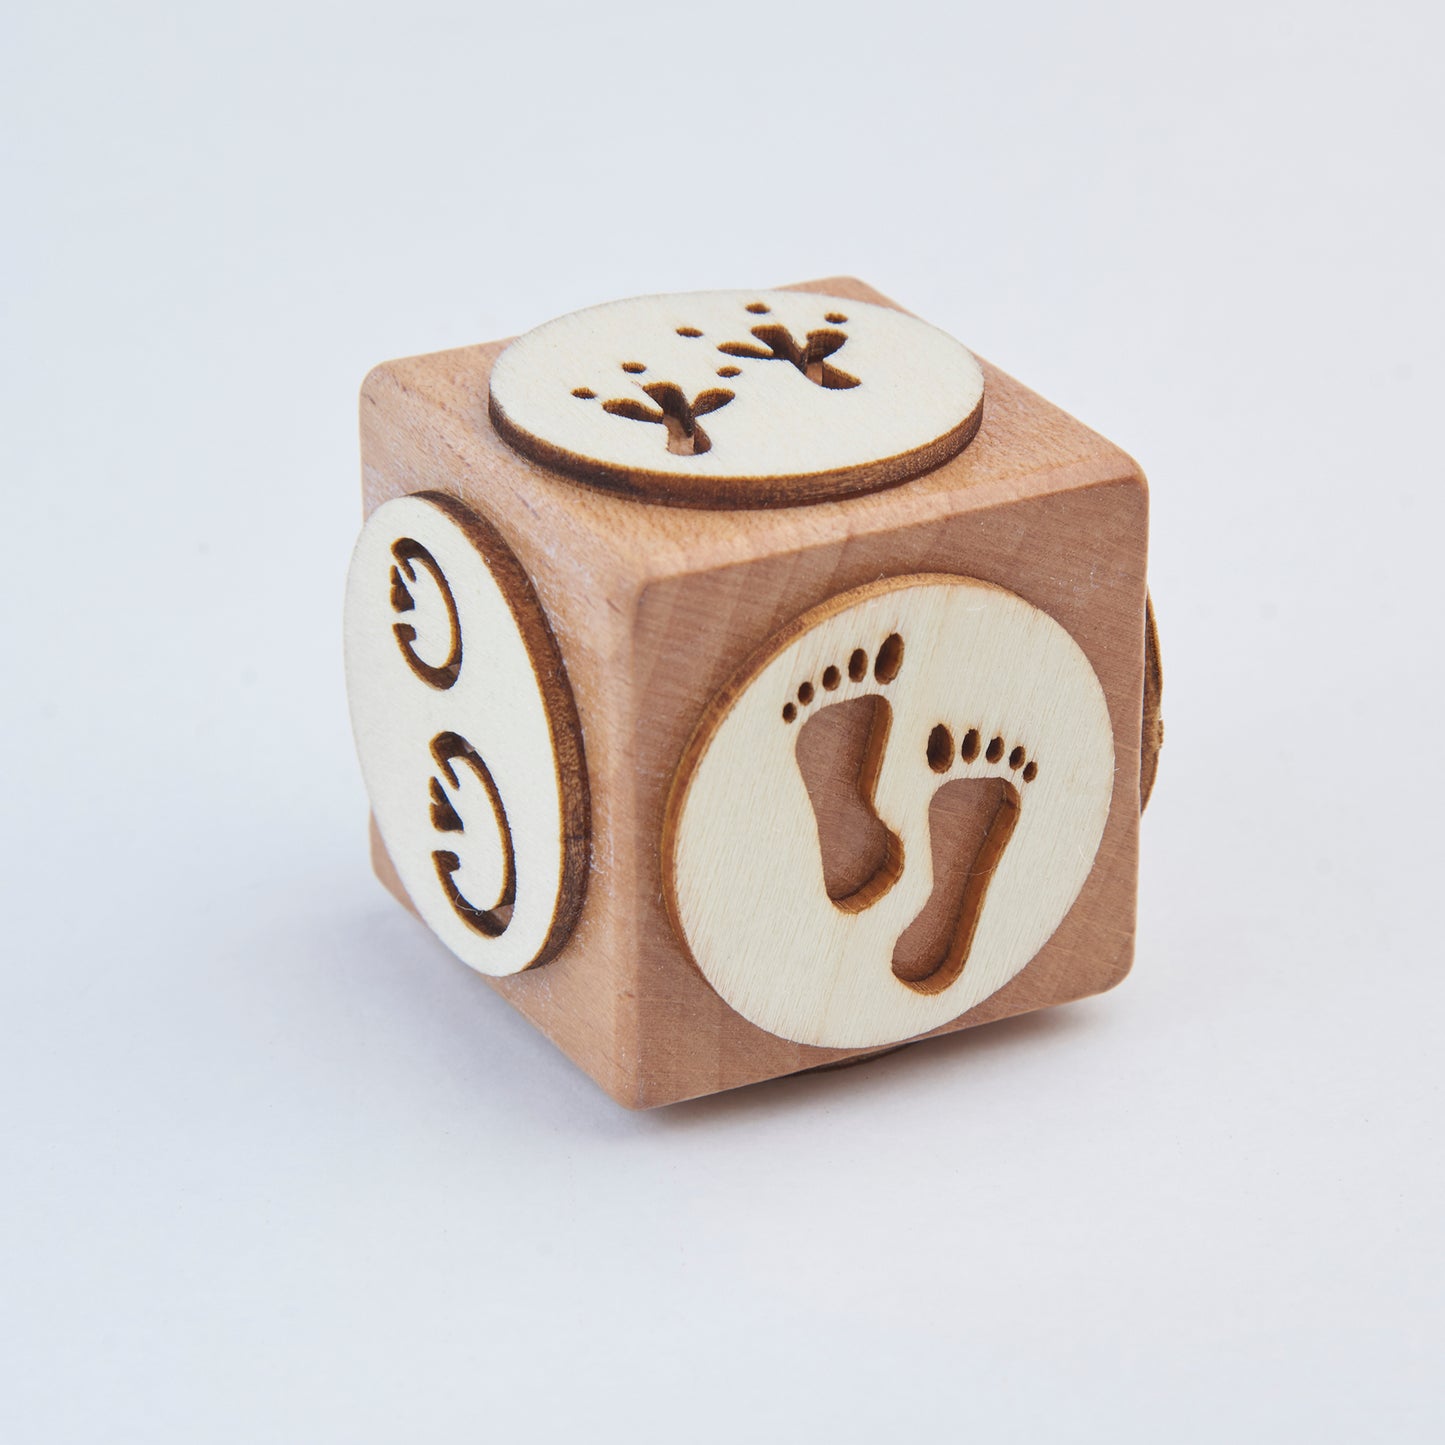 Footprint Playdough Stamp